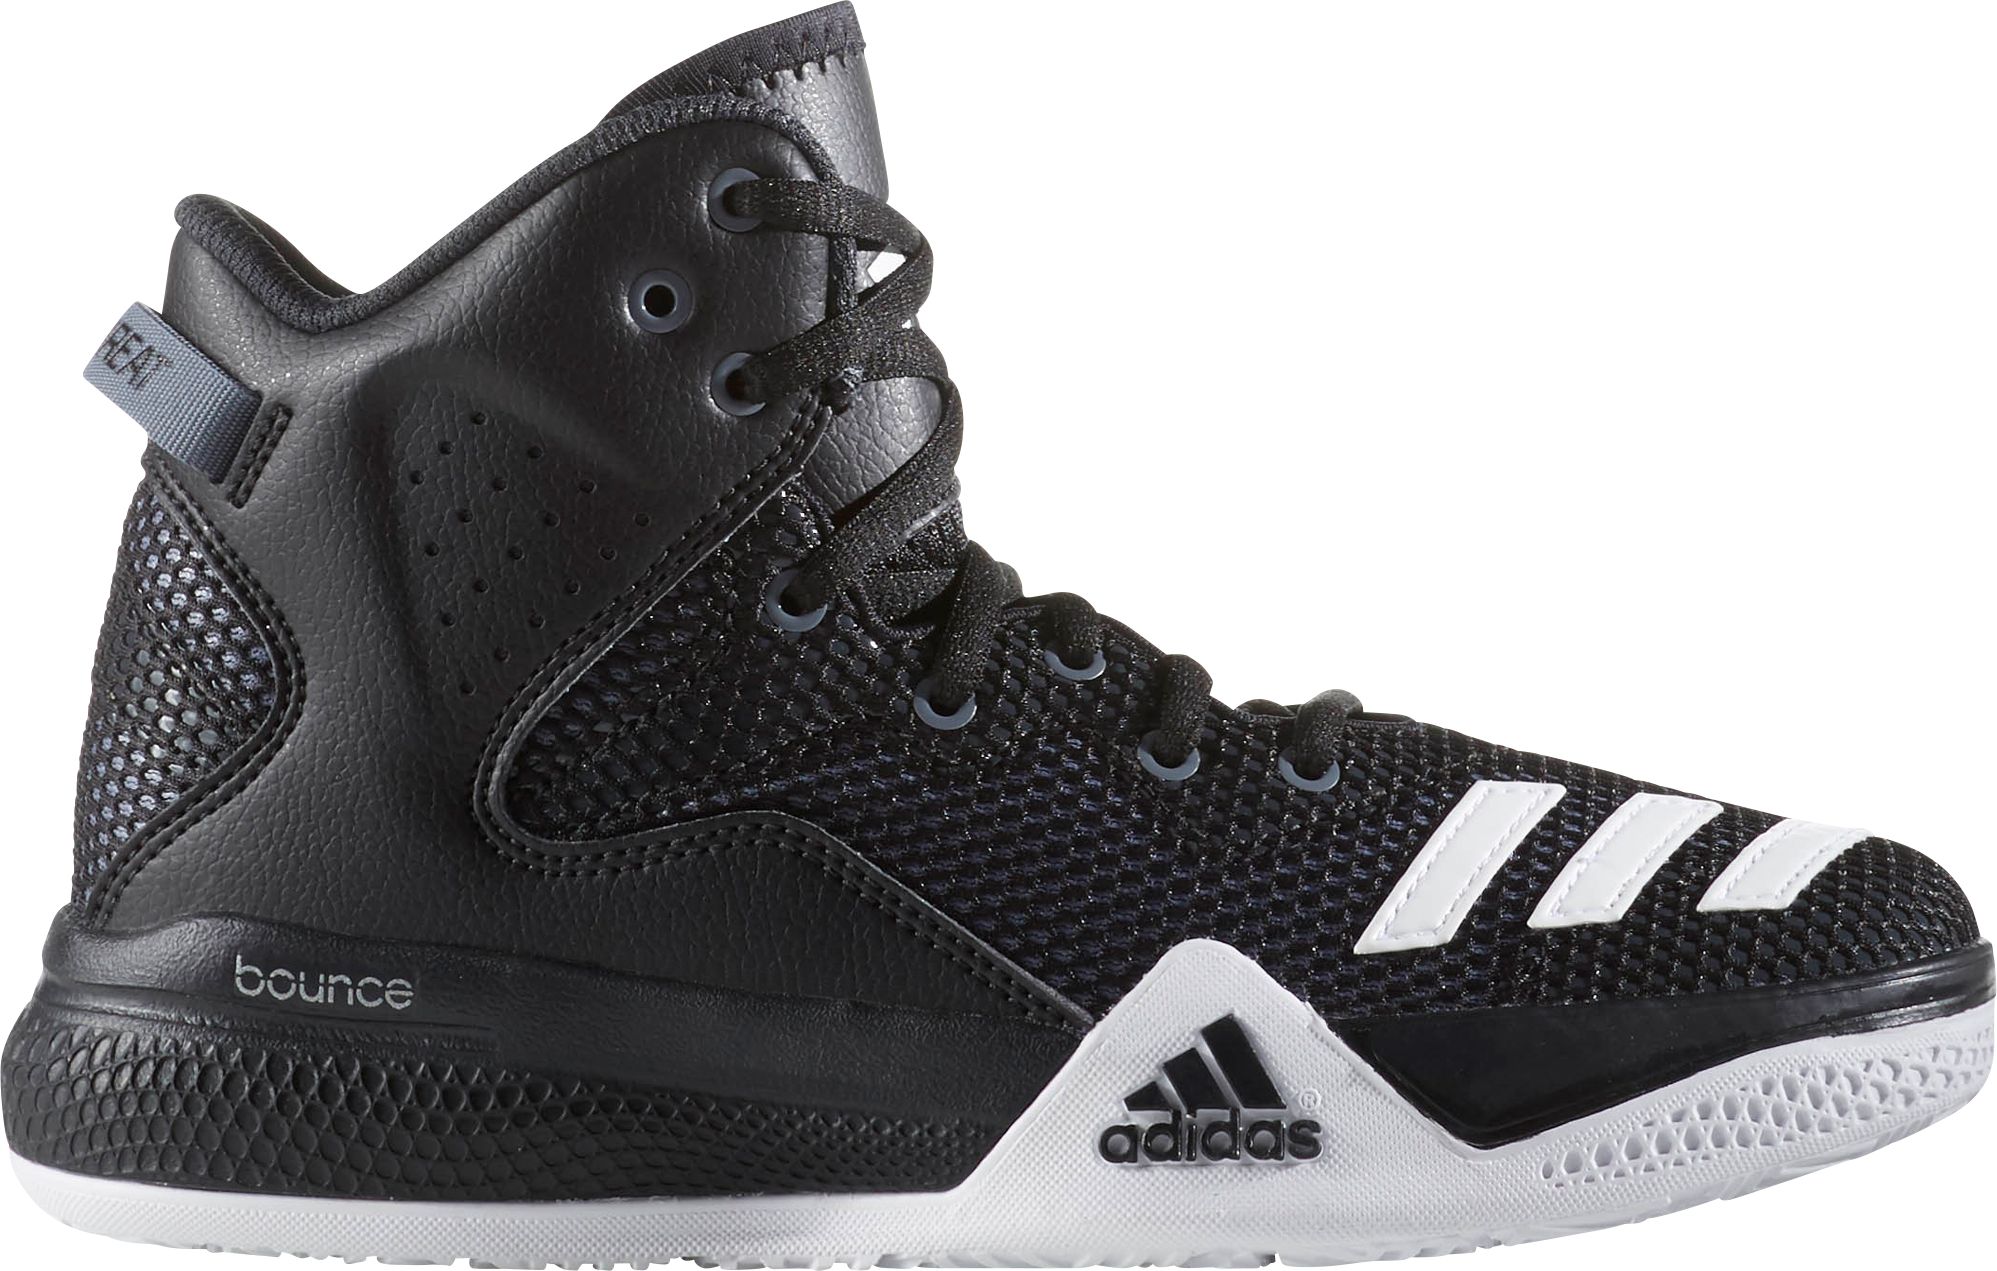 adidas menu0027s dual threat basketball shoes TXILTFQ